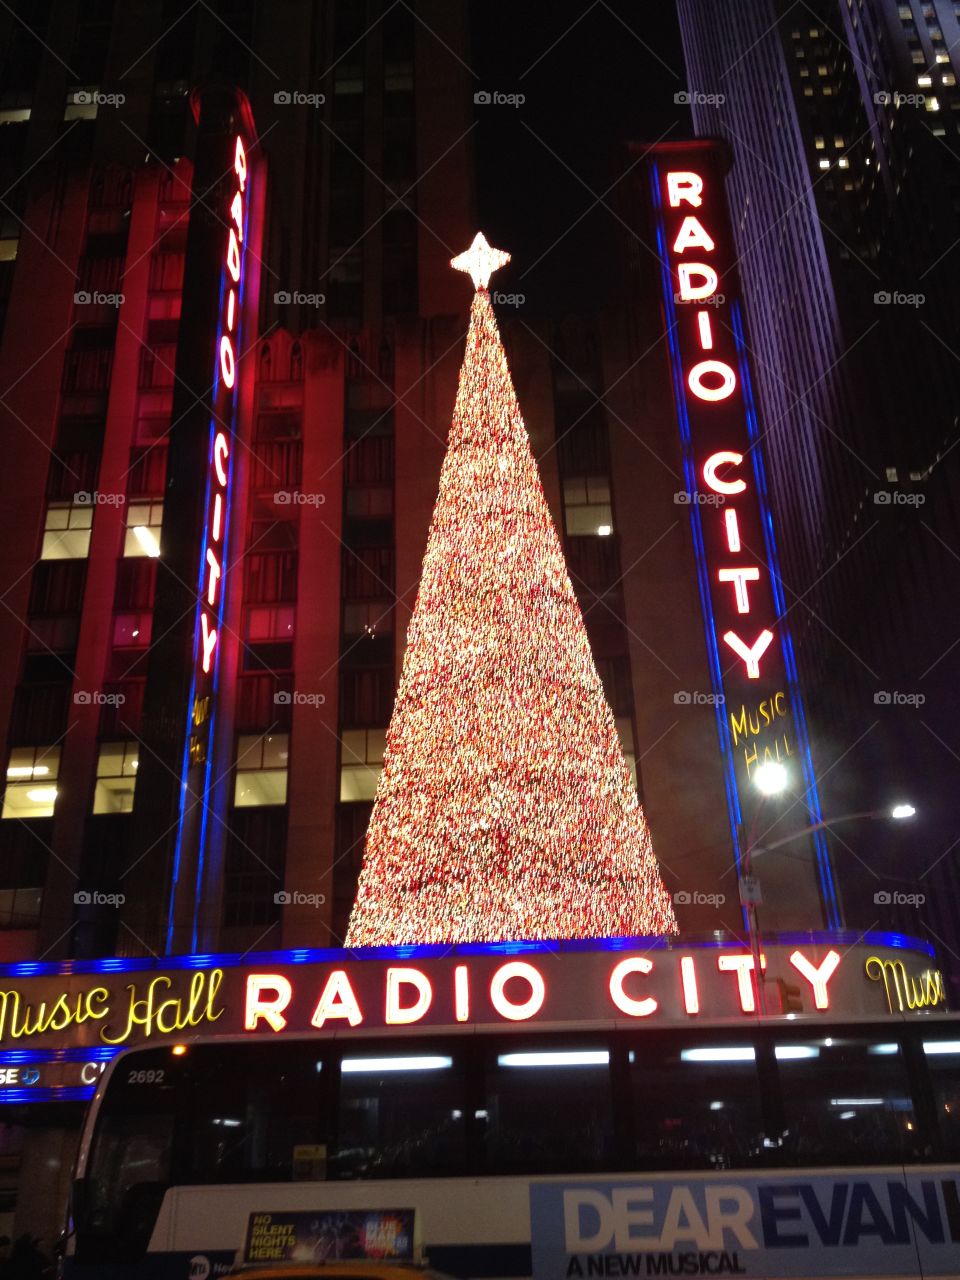 Typical Radio City